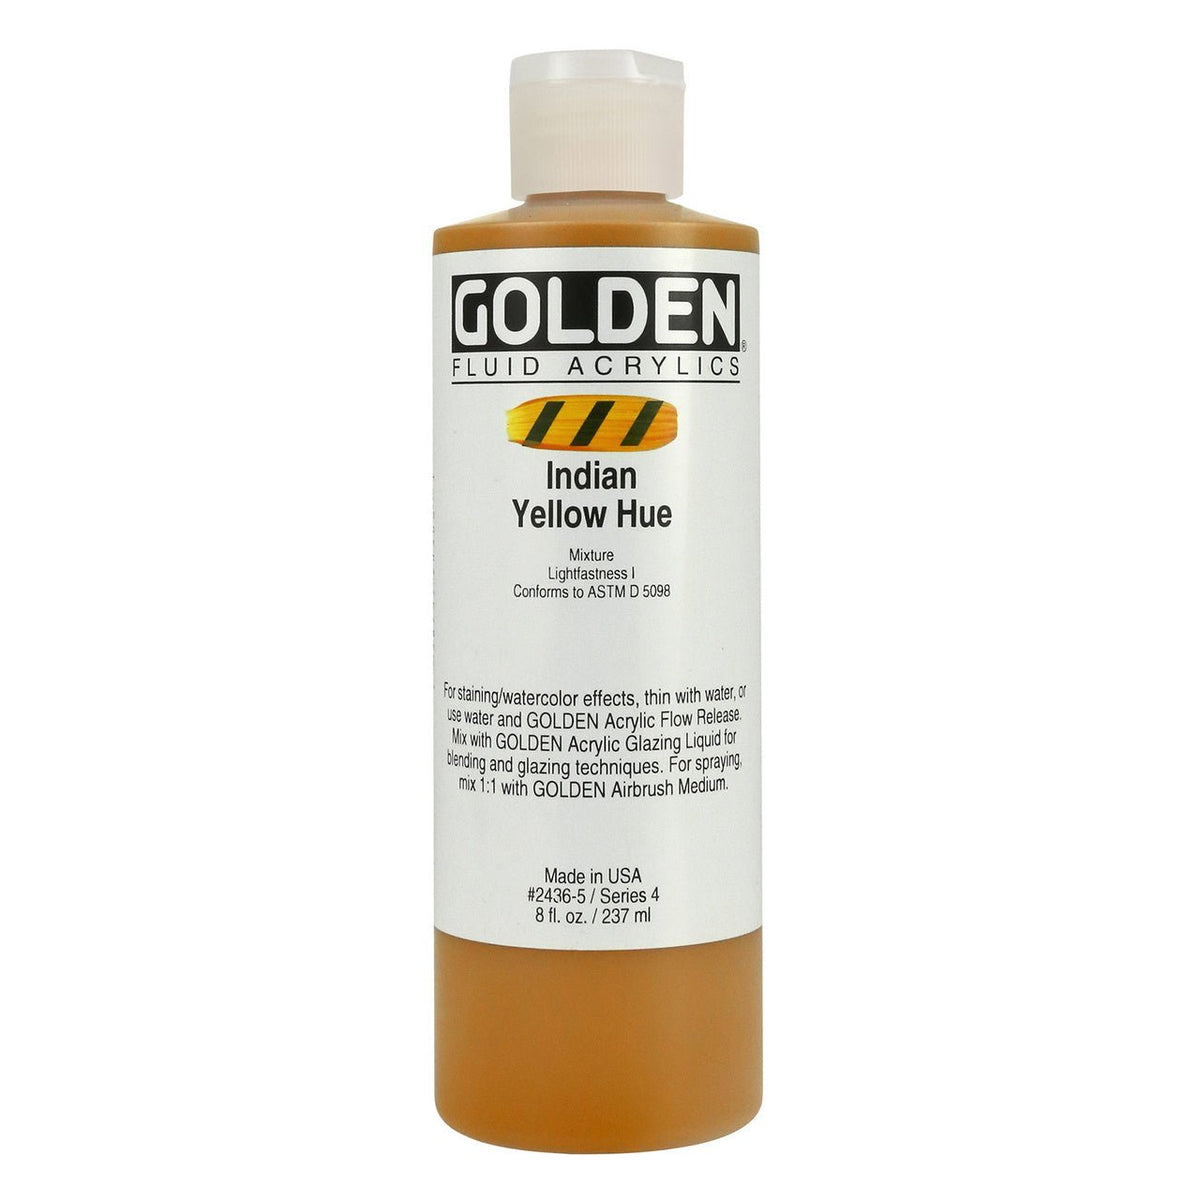 Golden Fluid Acrylic India Yellow Hue 8 oz - merriartist.com